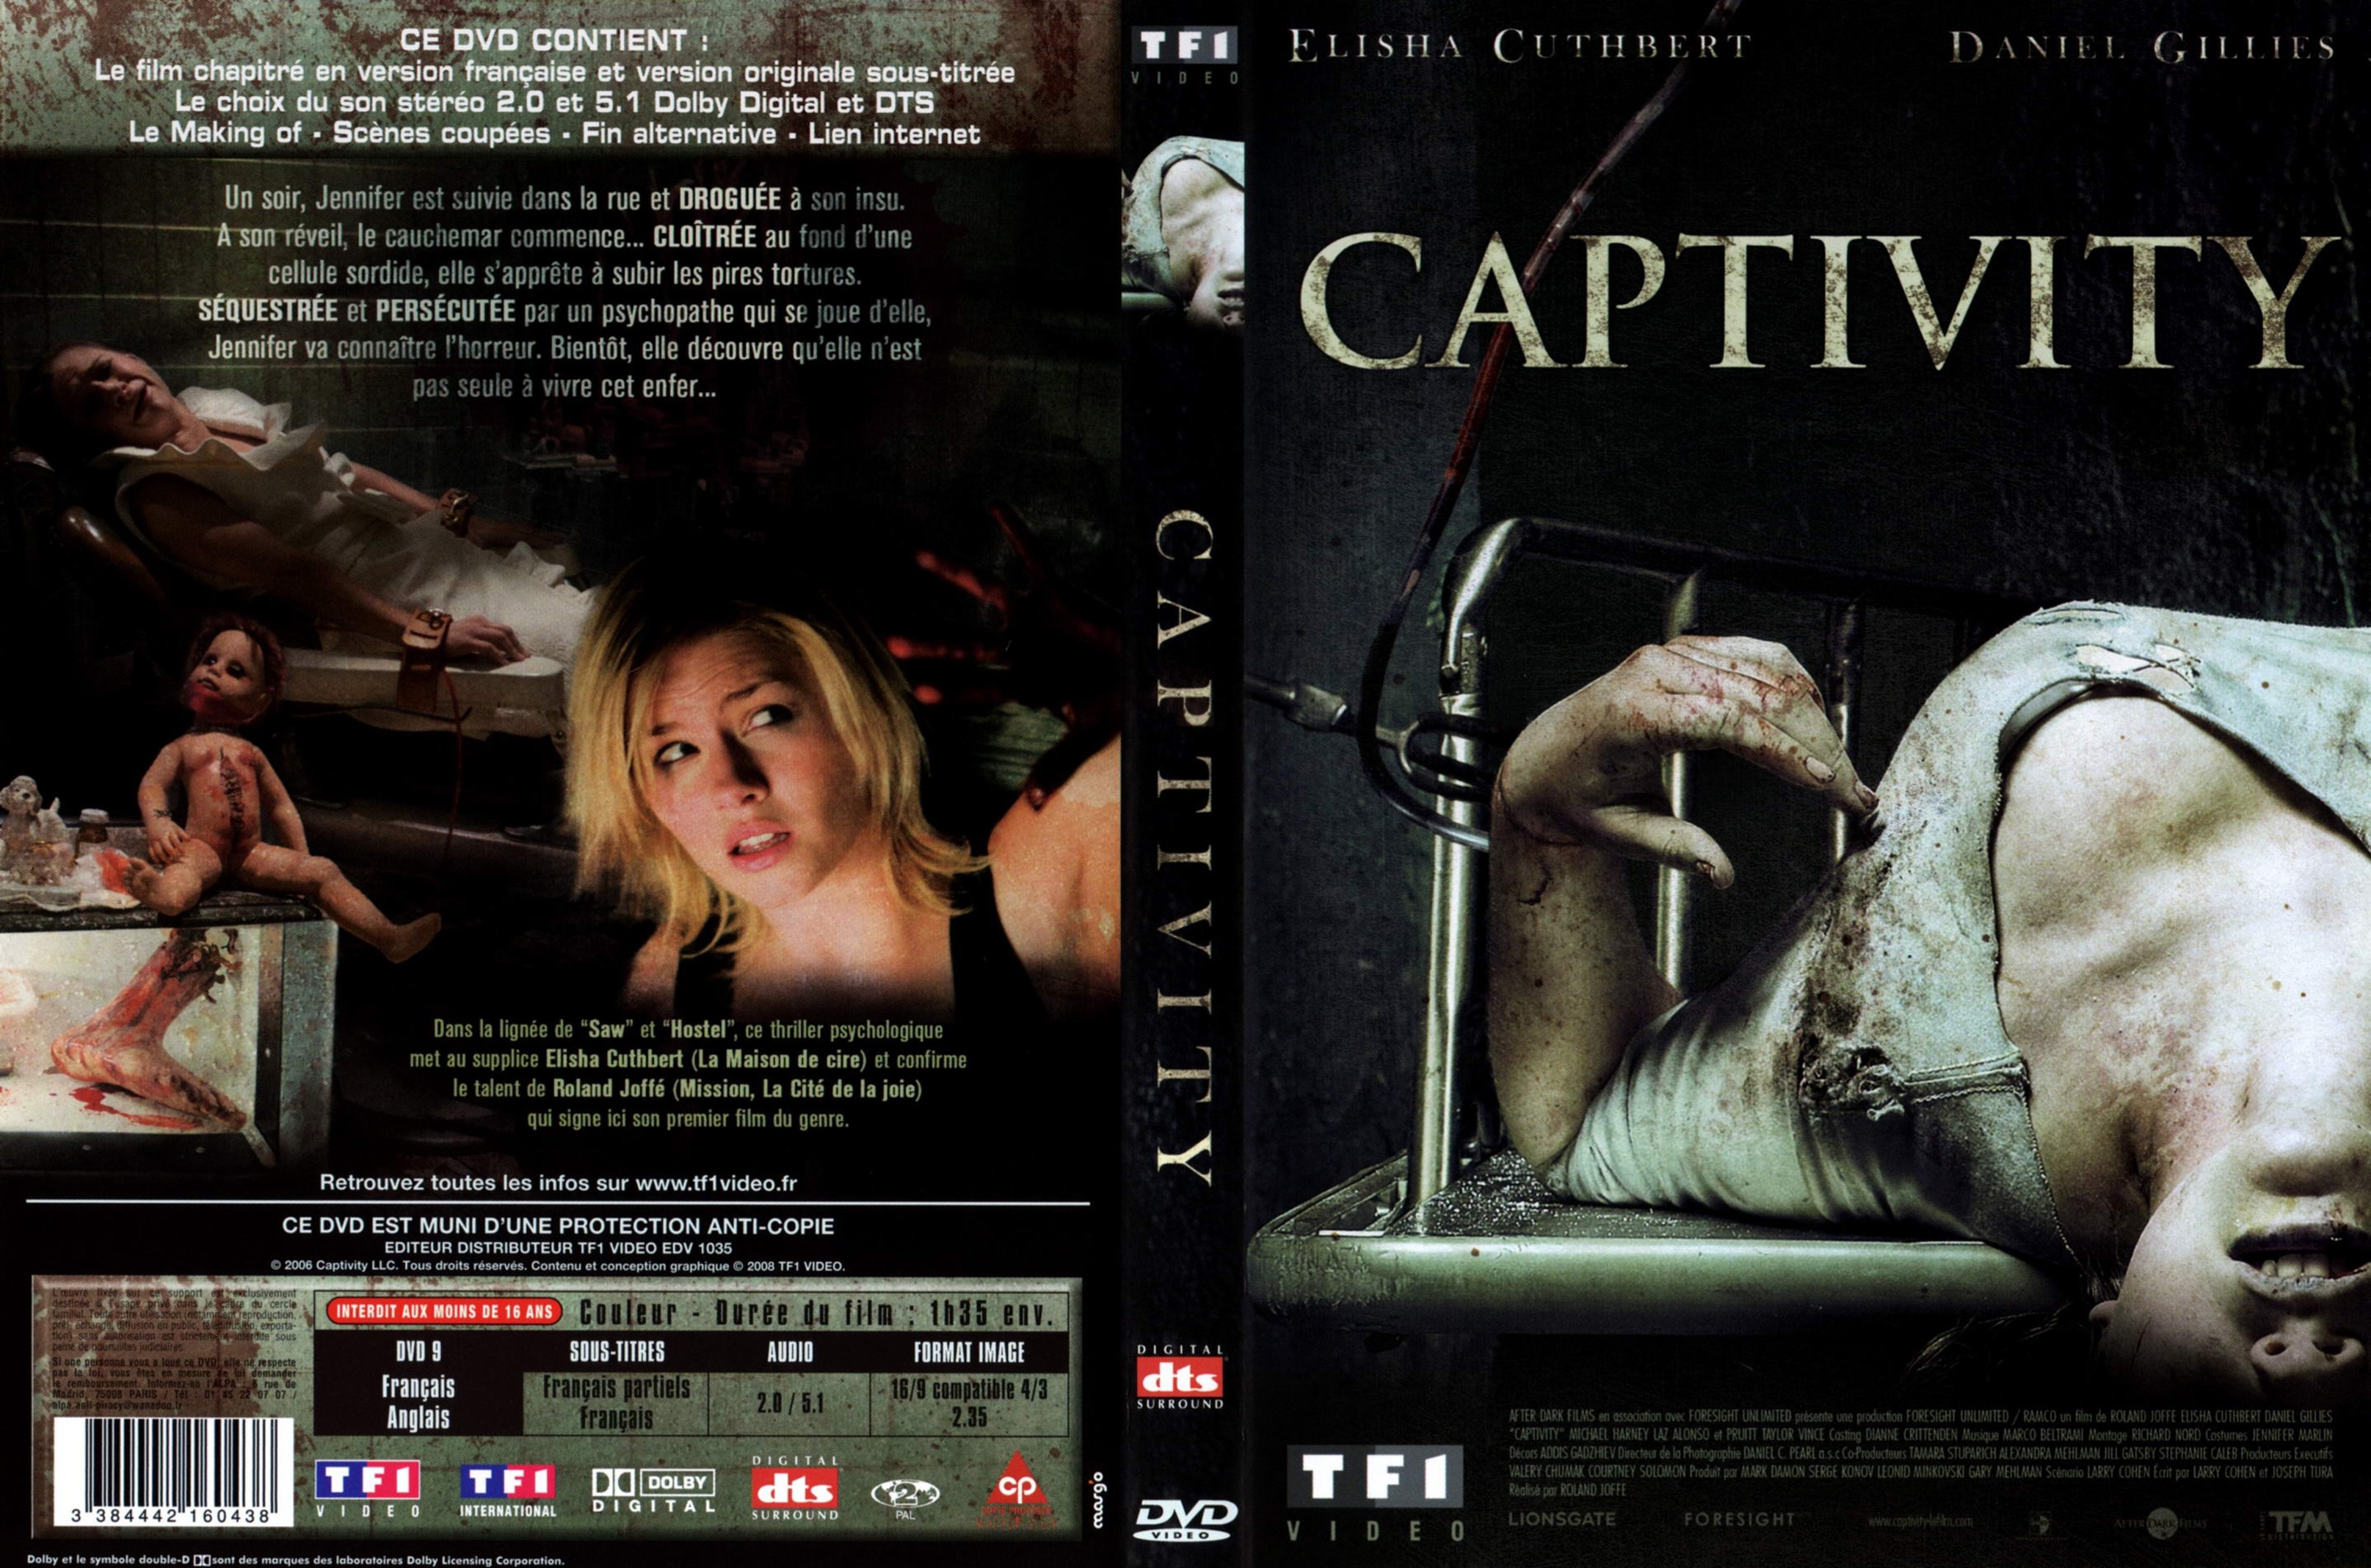 Jaquette DVD Captivity v3